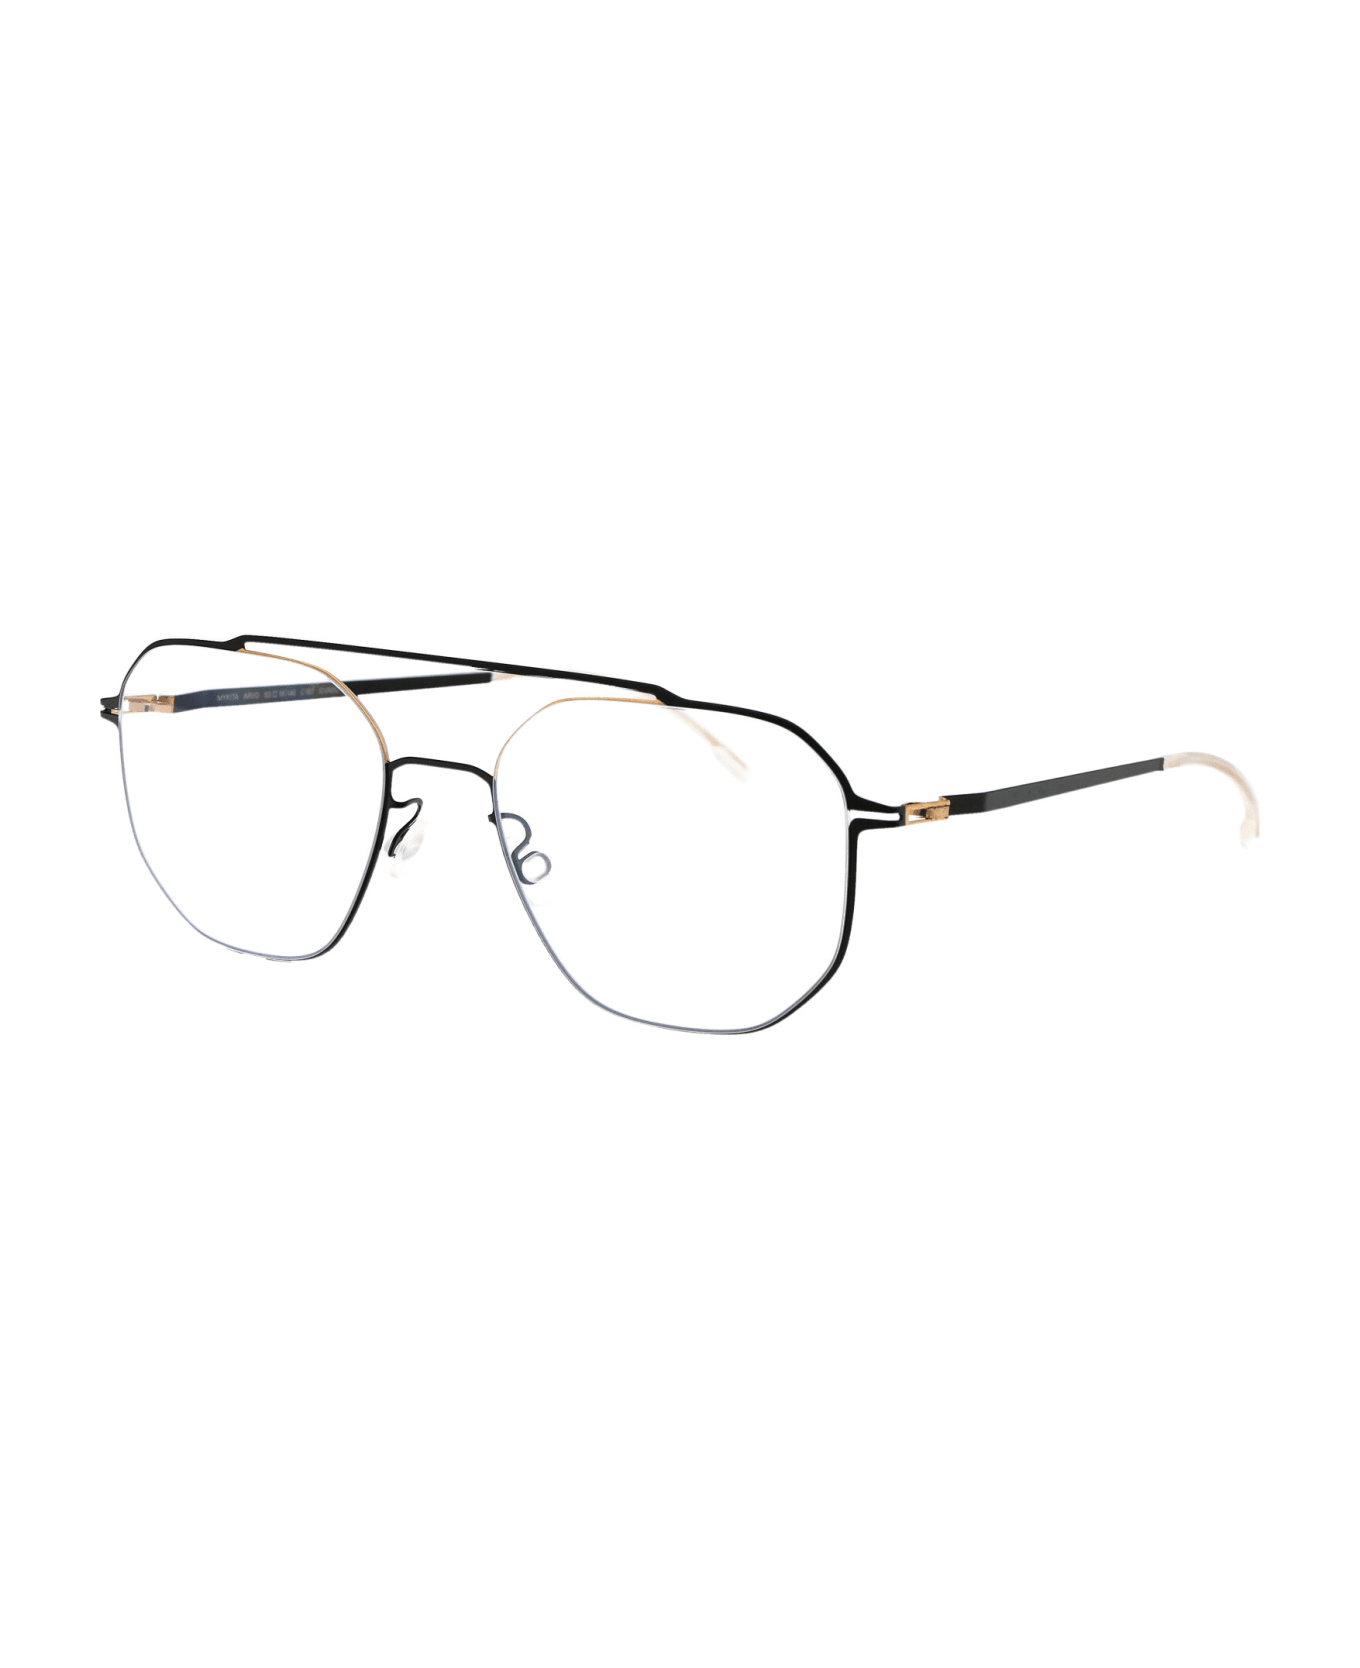 Mykita Arvo Glasses - 167 Gold Jetblack|Clear アイウェア